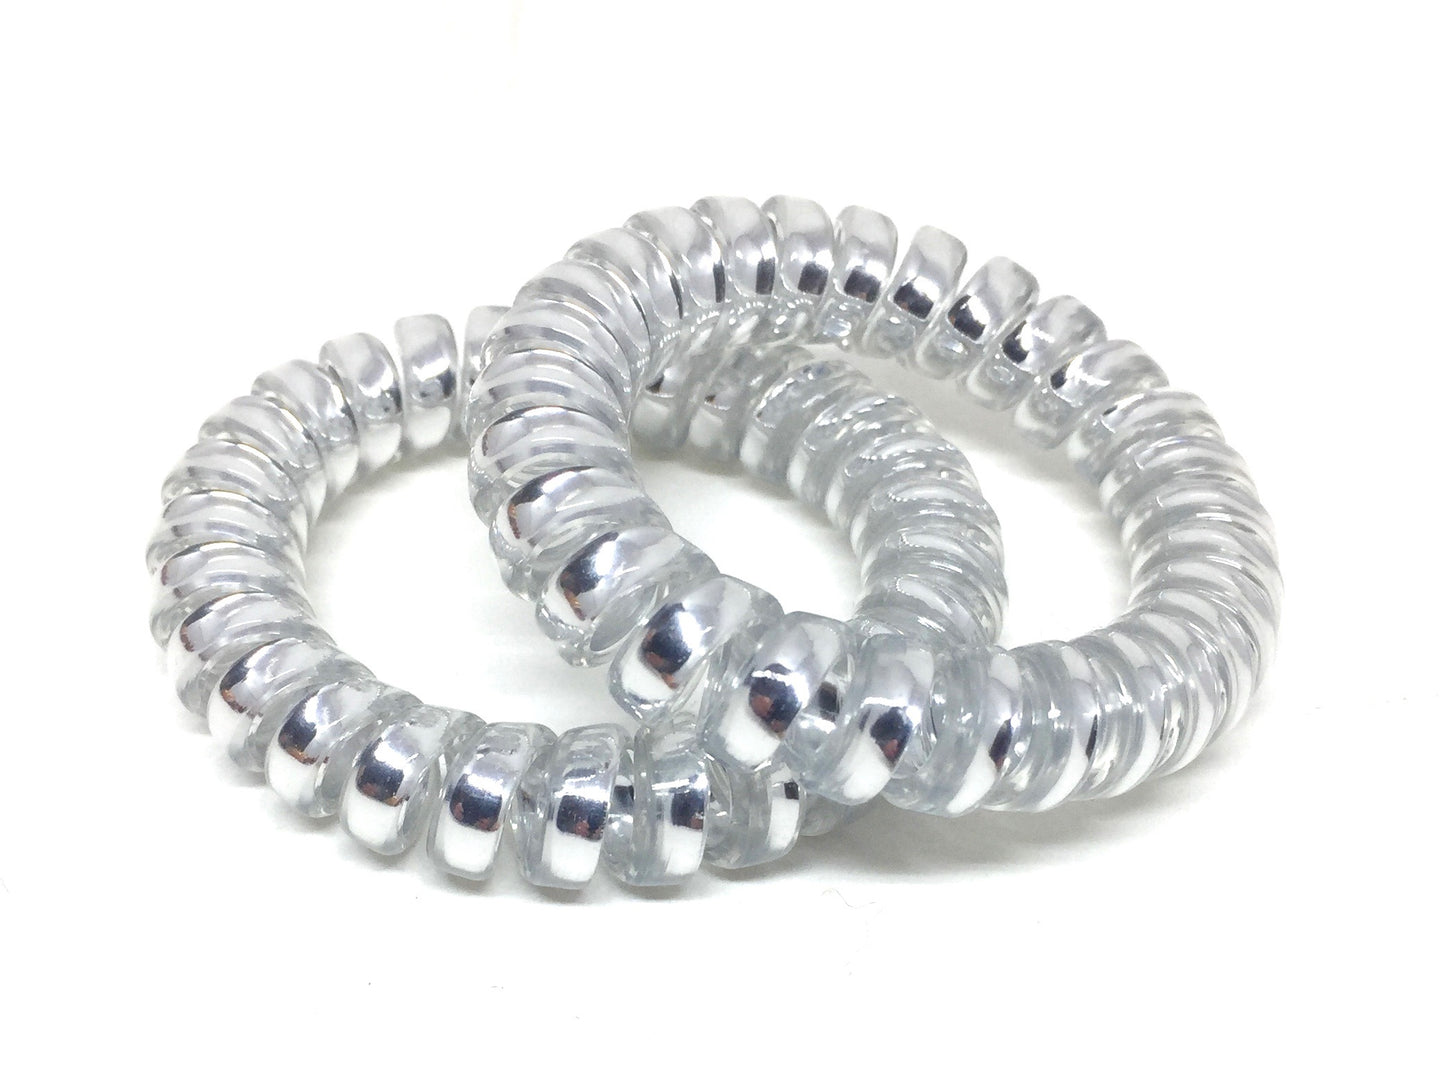 Large Spiral Hair Ties - silver